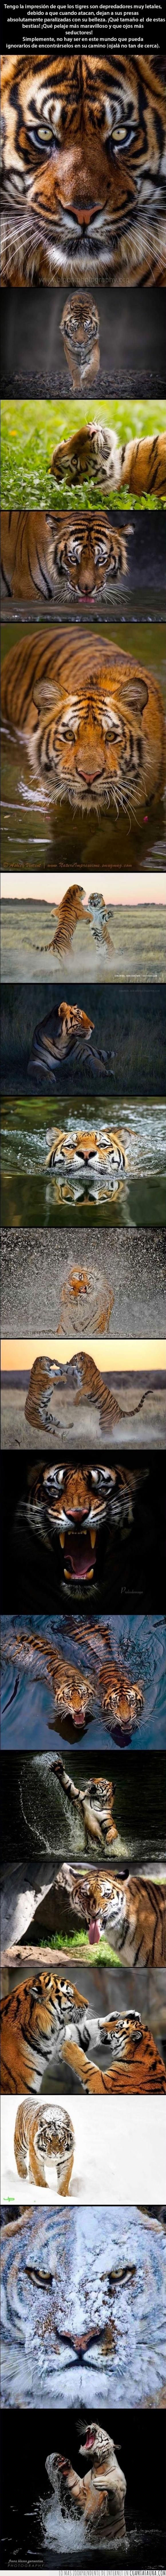 animal,majestuoso,tigre